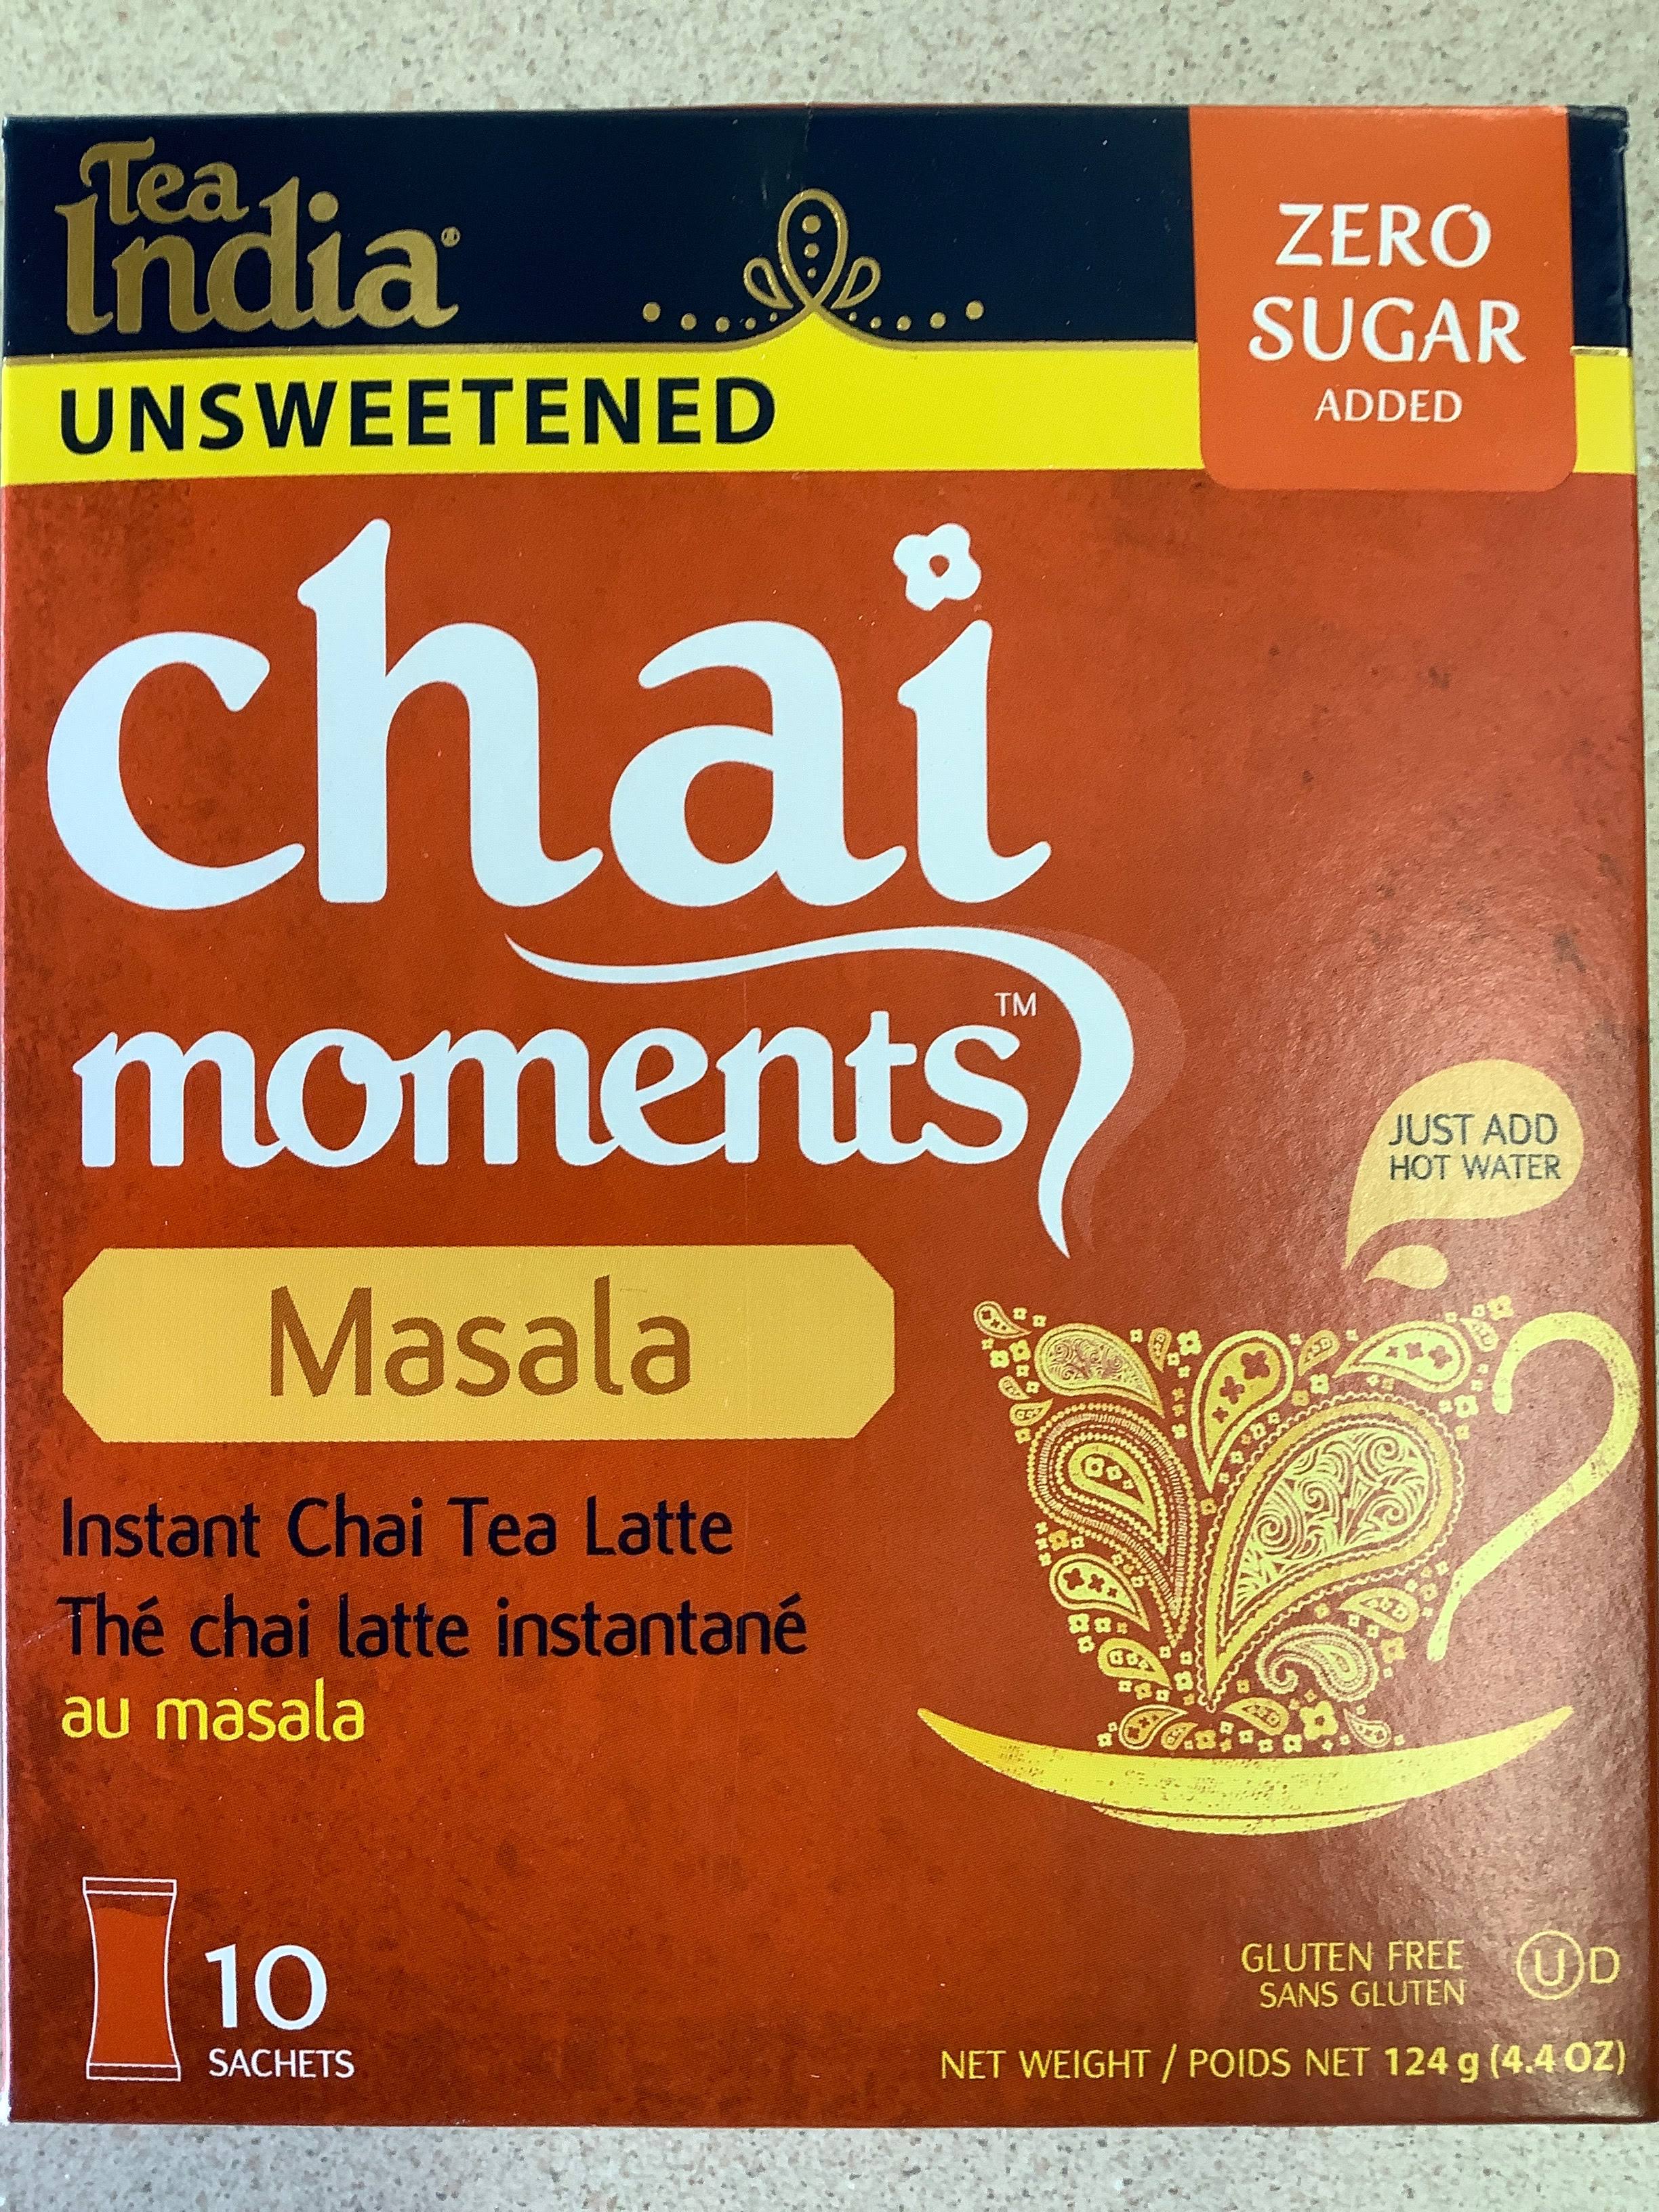 Tea India Masala Chai Moments, Unsweetened